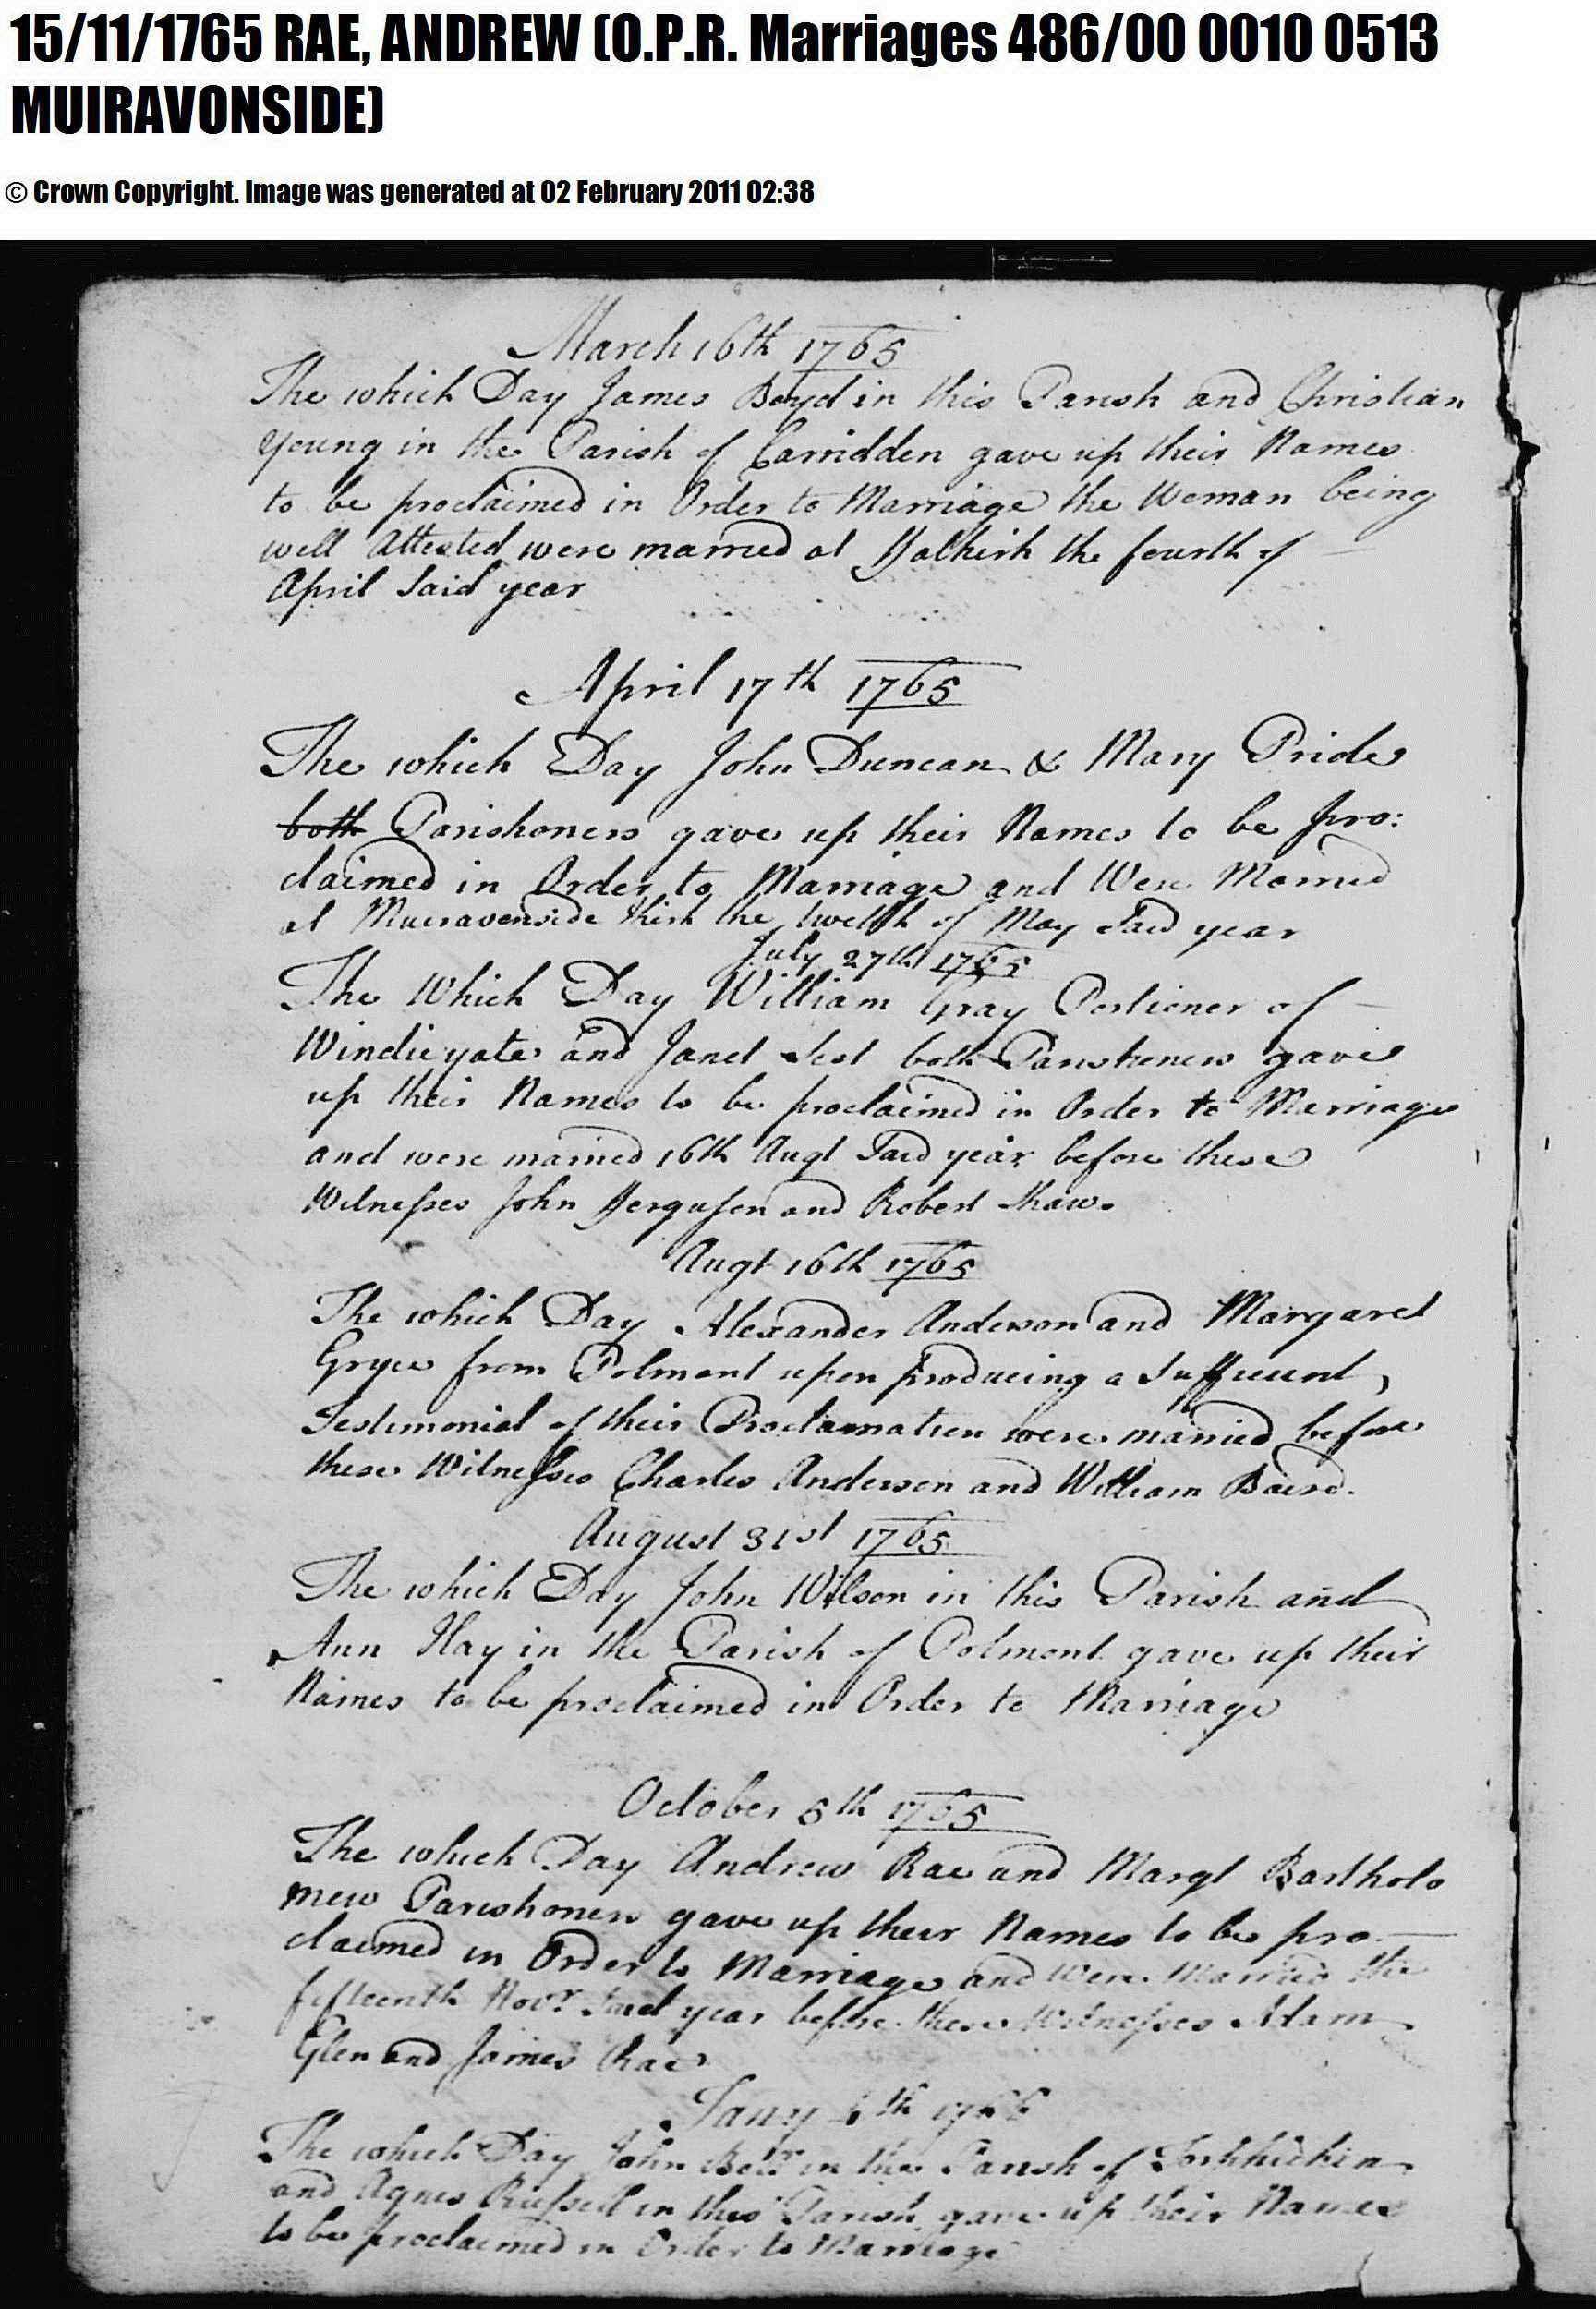 AndrewRaeMargaretBartholomew_M1765, October 15, 1765